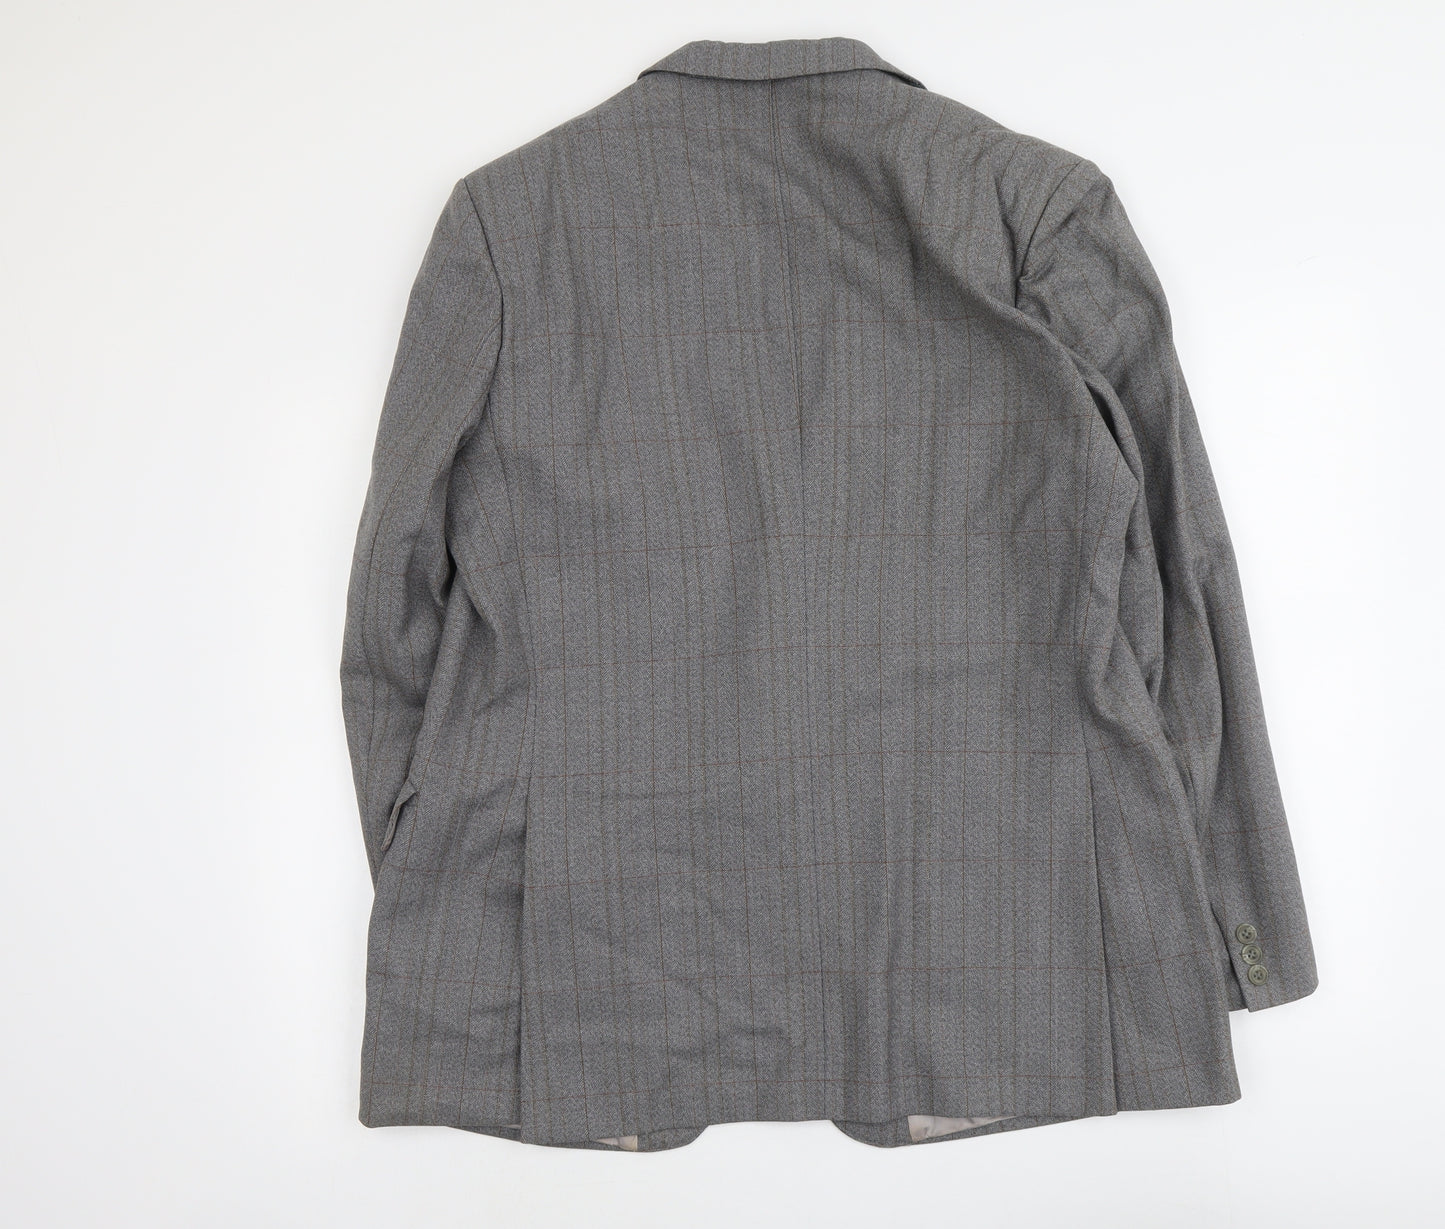 Magee Mens Grey Check Wool Jacket Suit Jacket Size XL Regular